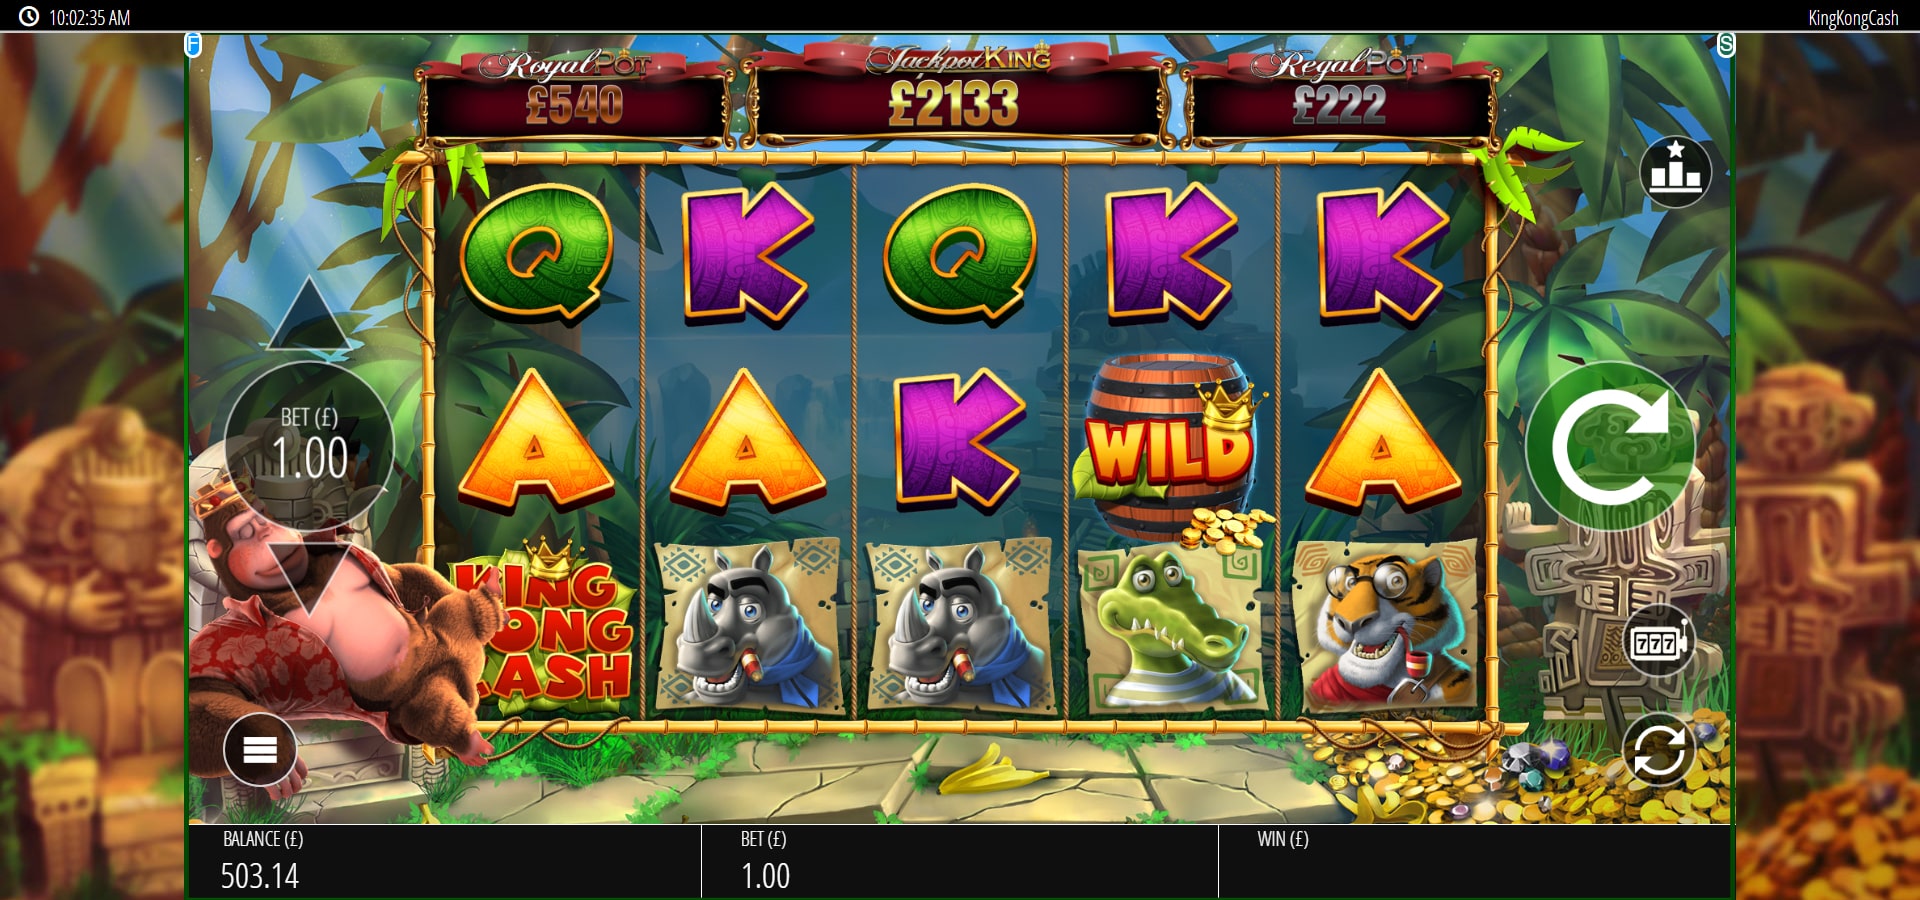 King Kong Cash Jackpot King Free Spins